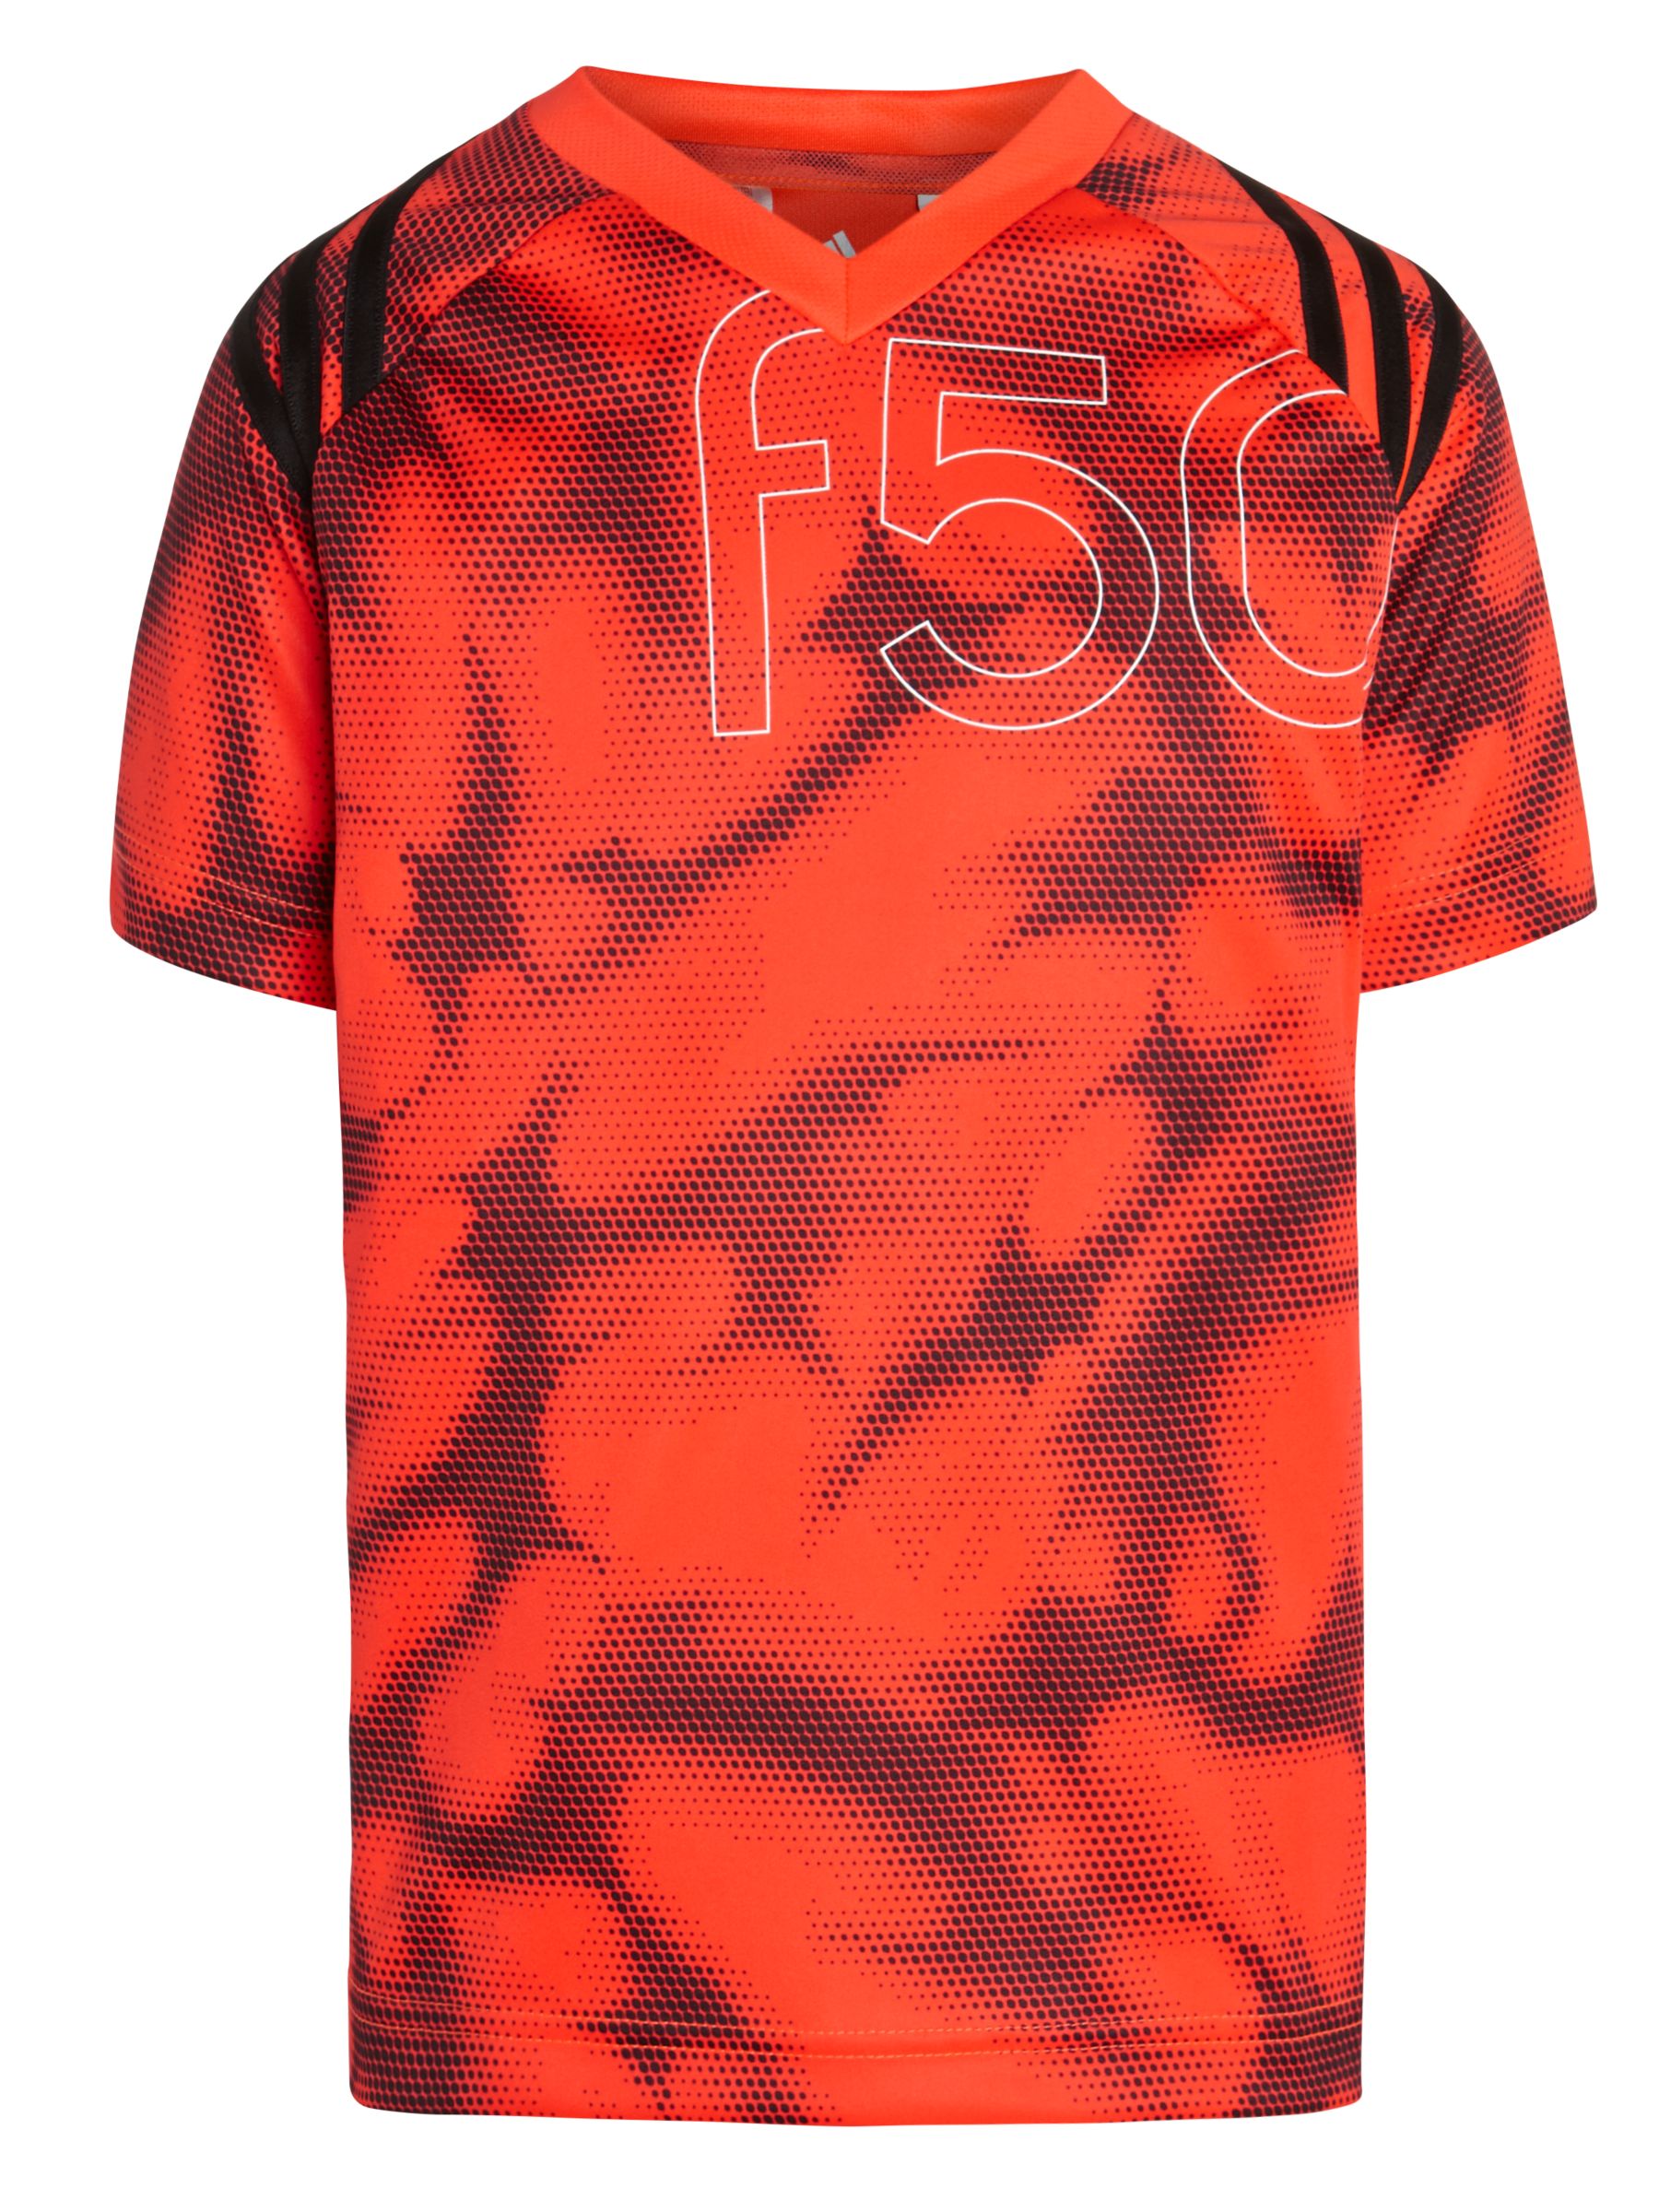 Adidas F50 Boy's Graphic T-Shirt, Solar 